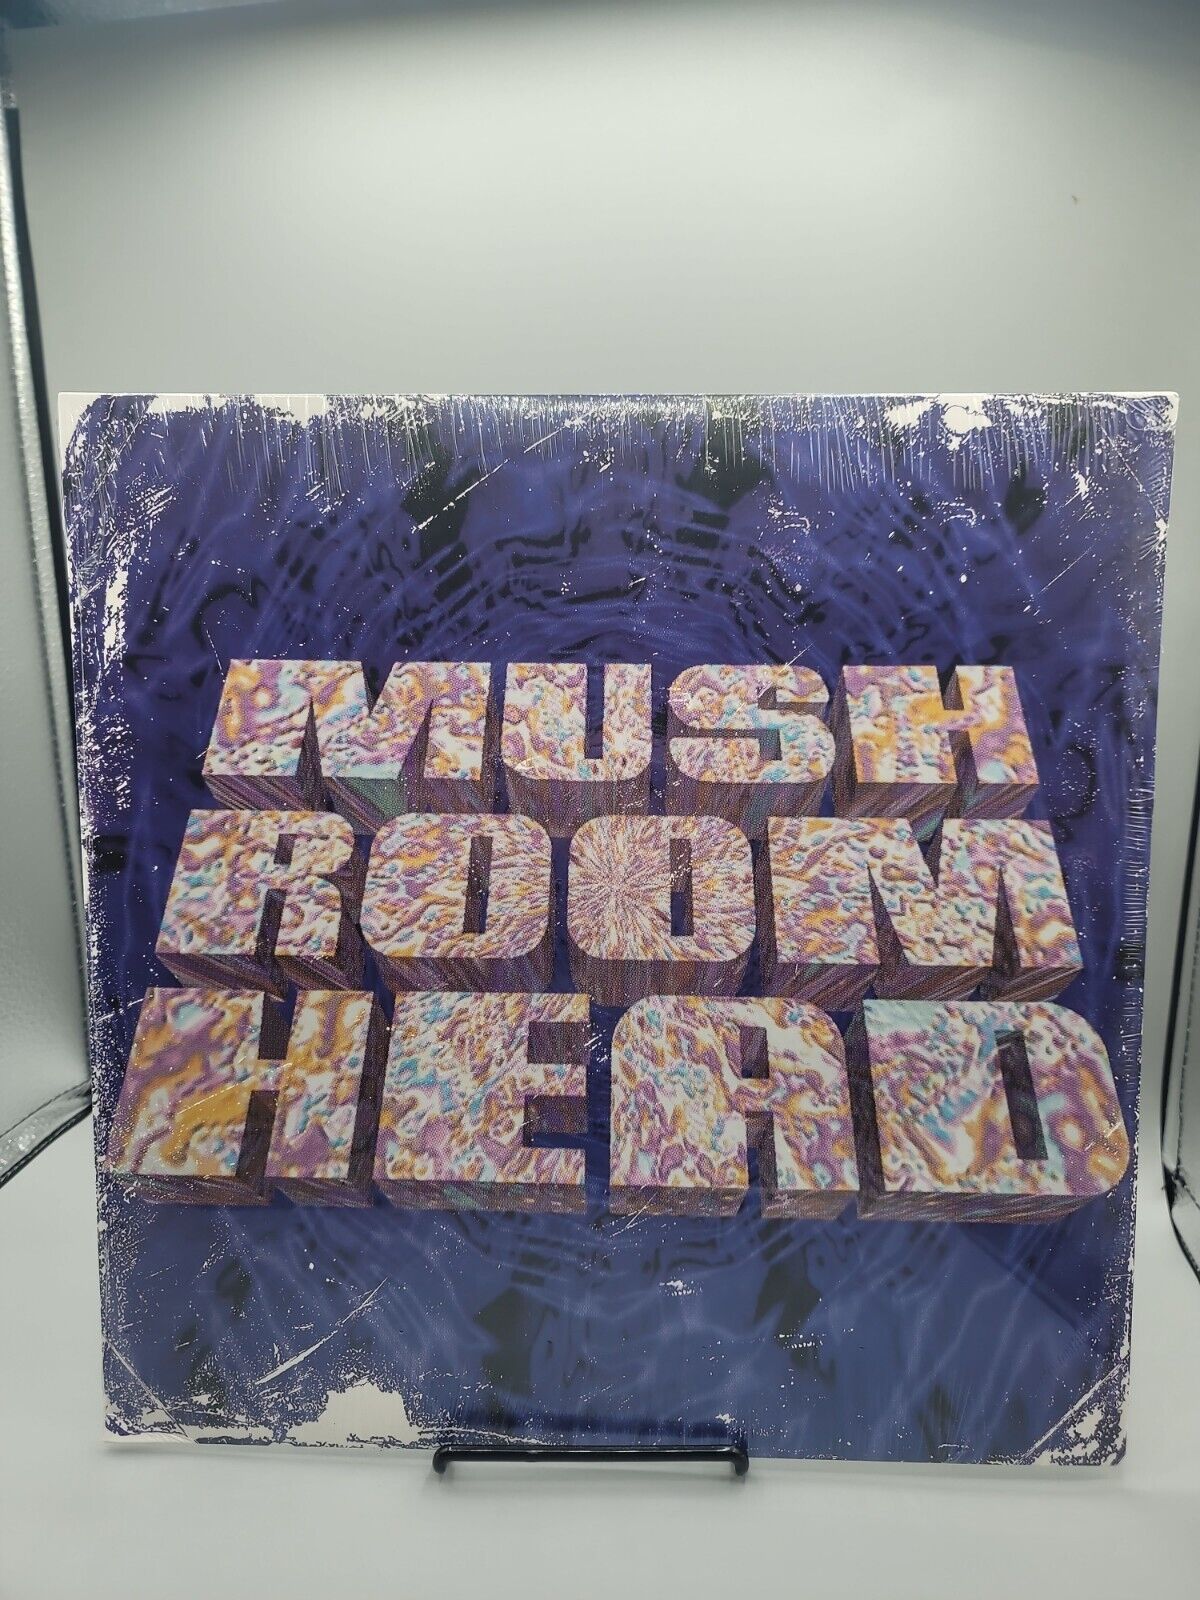 Mushroomhead - Self titled Vinyl LP - Filthy Hands - Brand New Sealed